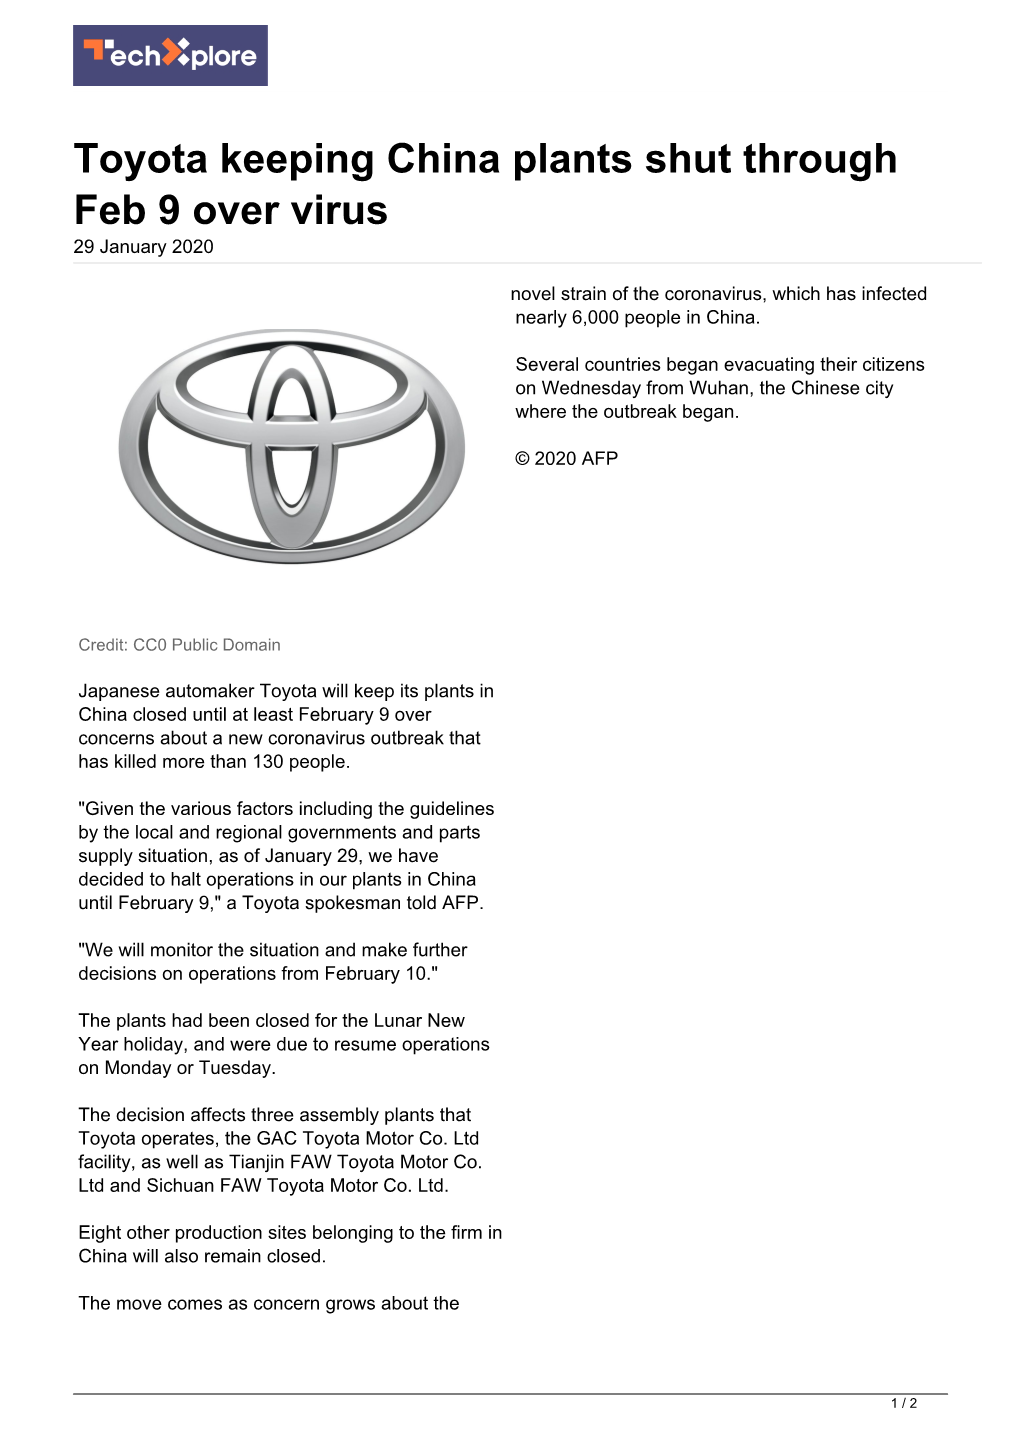 Toyota Keeping China Plants Shut Through Feb 9 Over Virus 29 January 2020